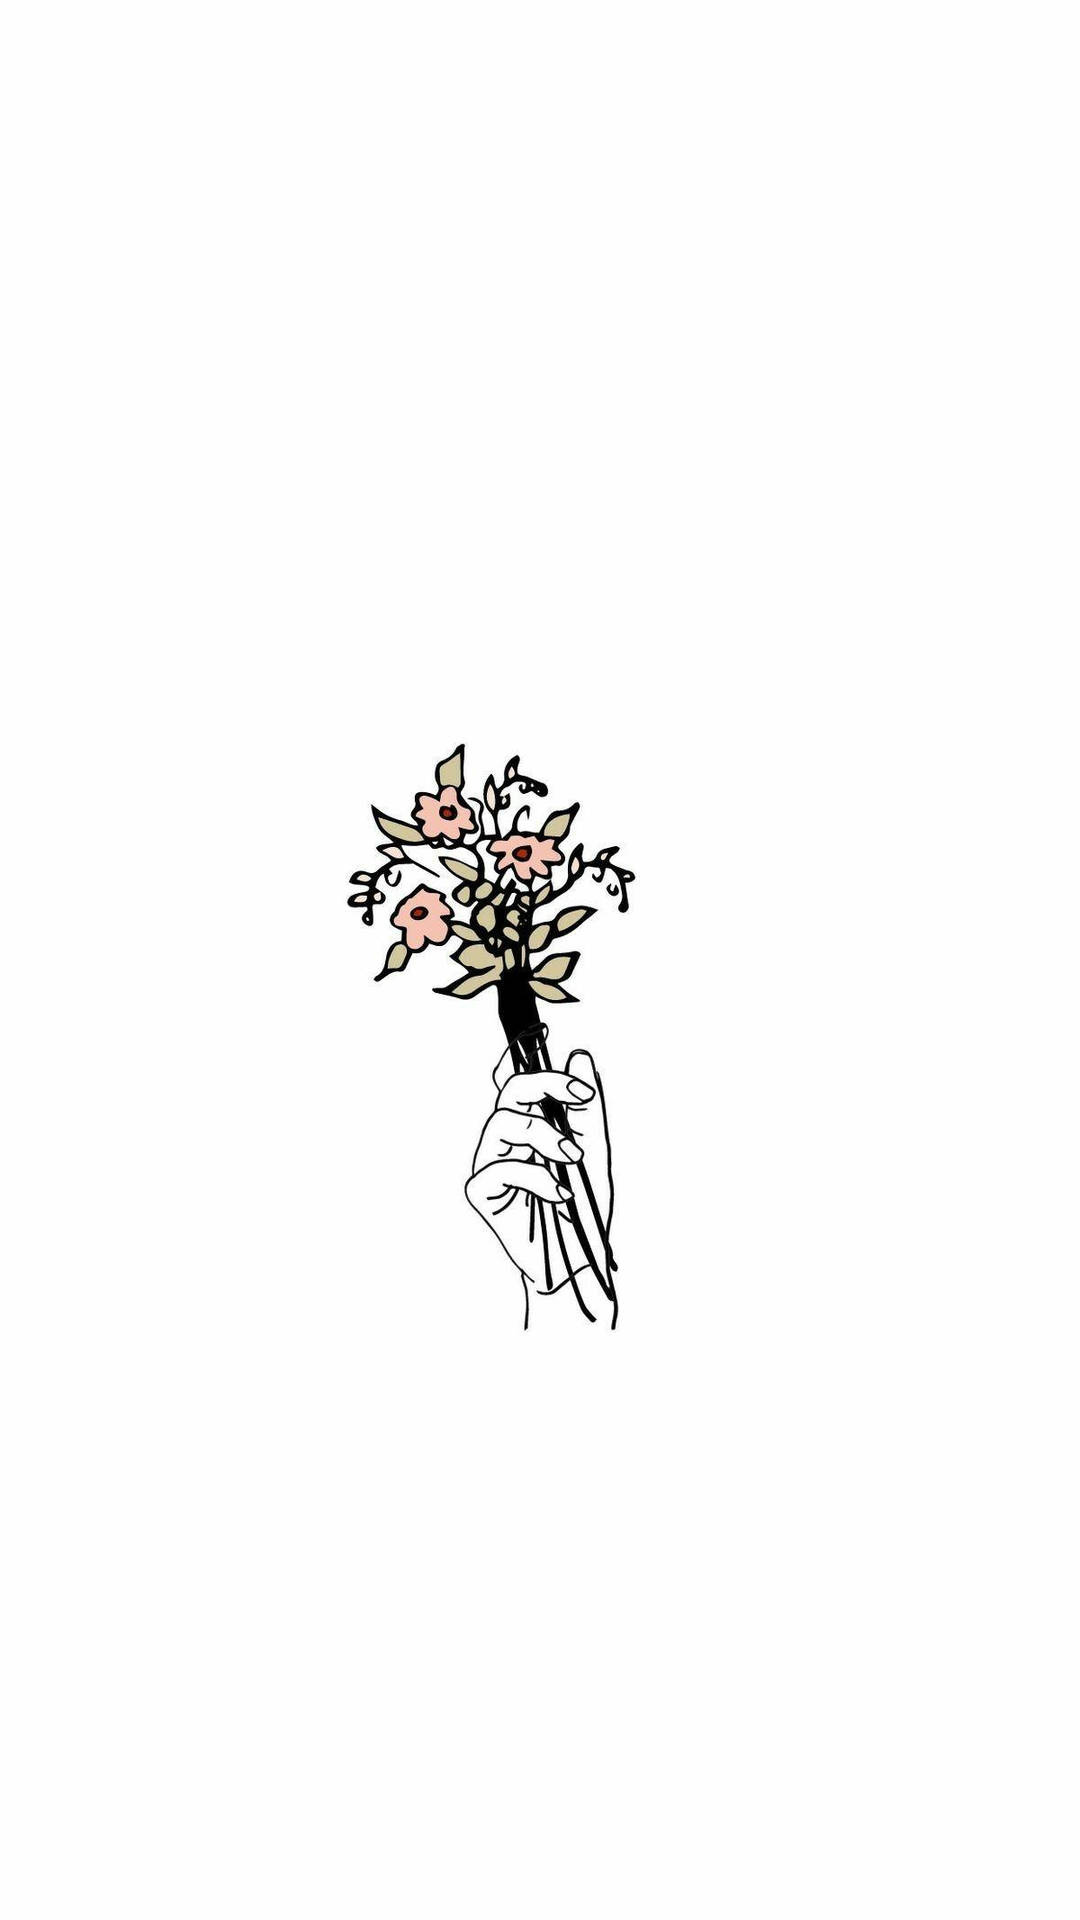 Minimalist Aesthetic Hand Holding Flowers Wallpaper